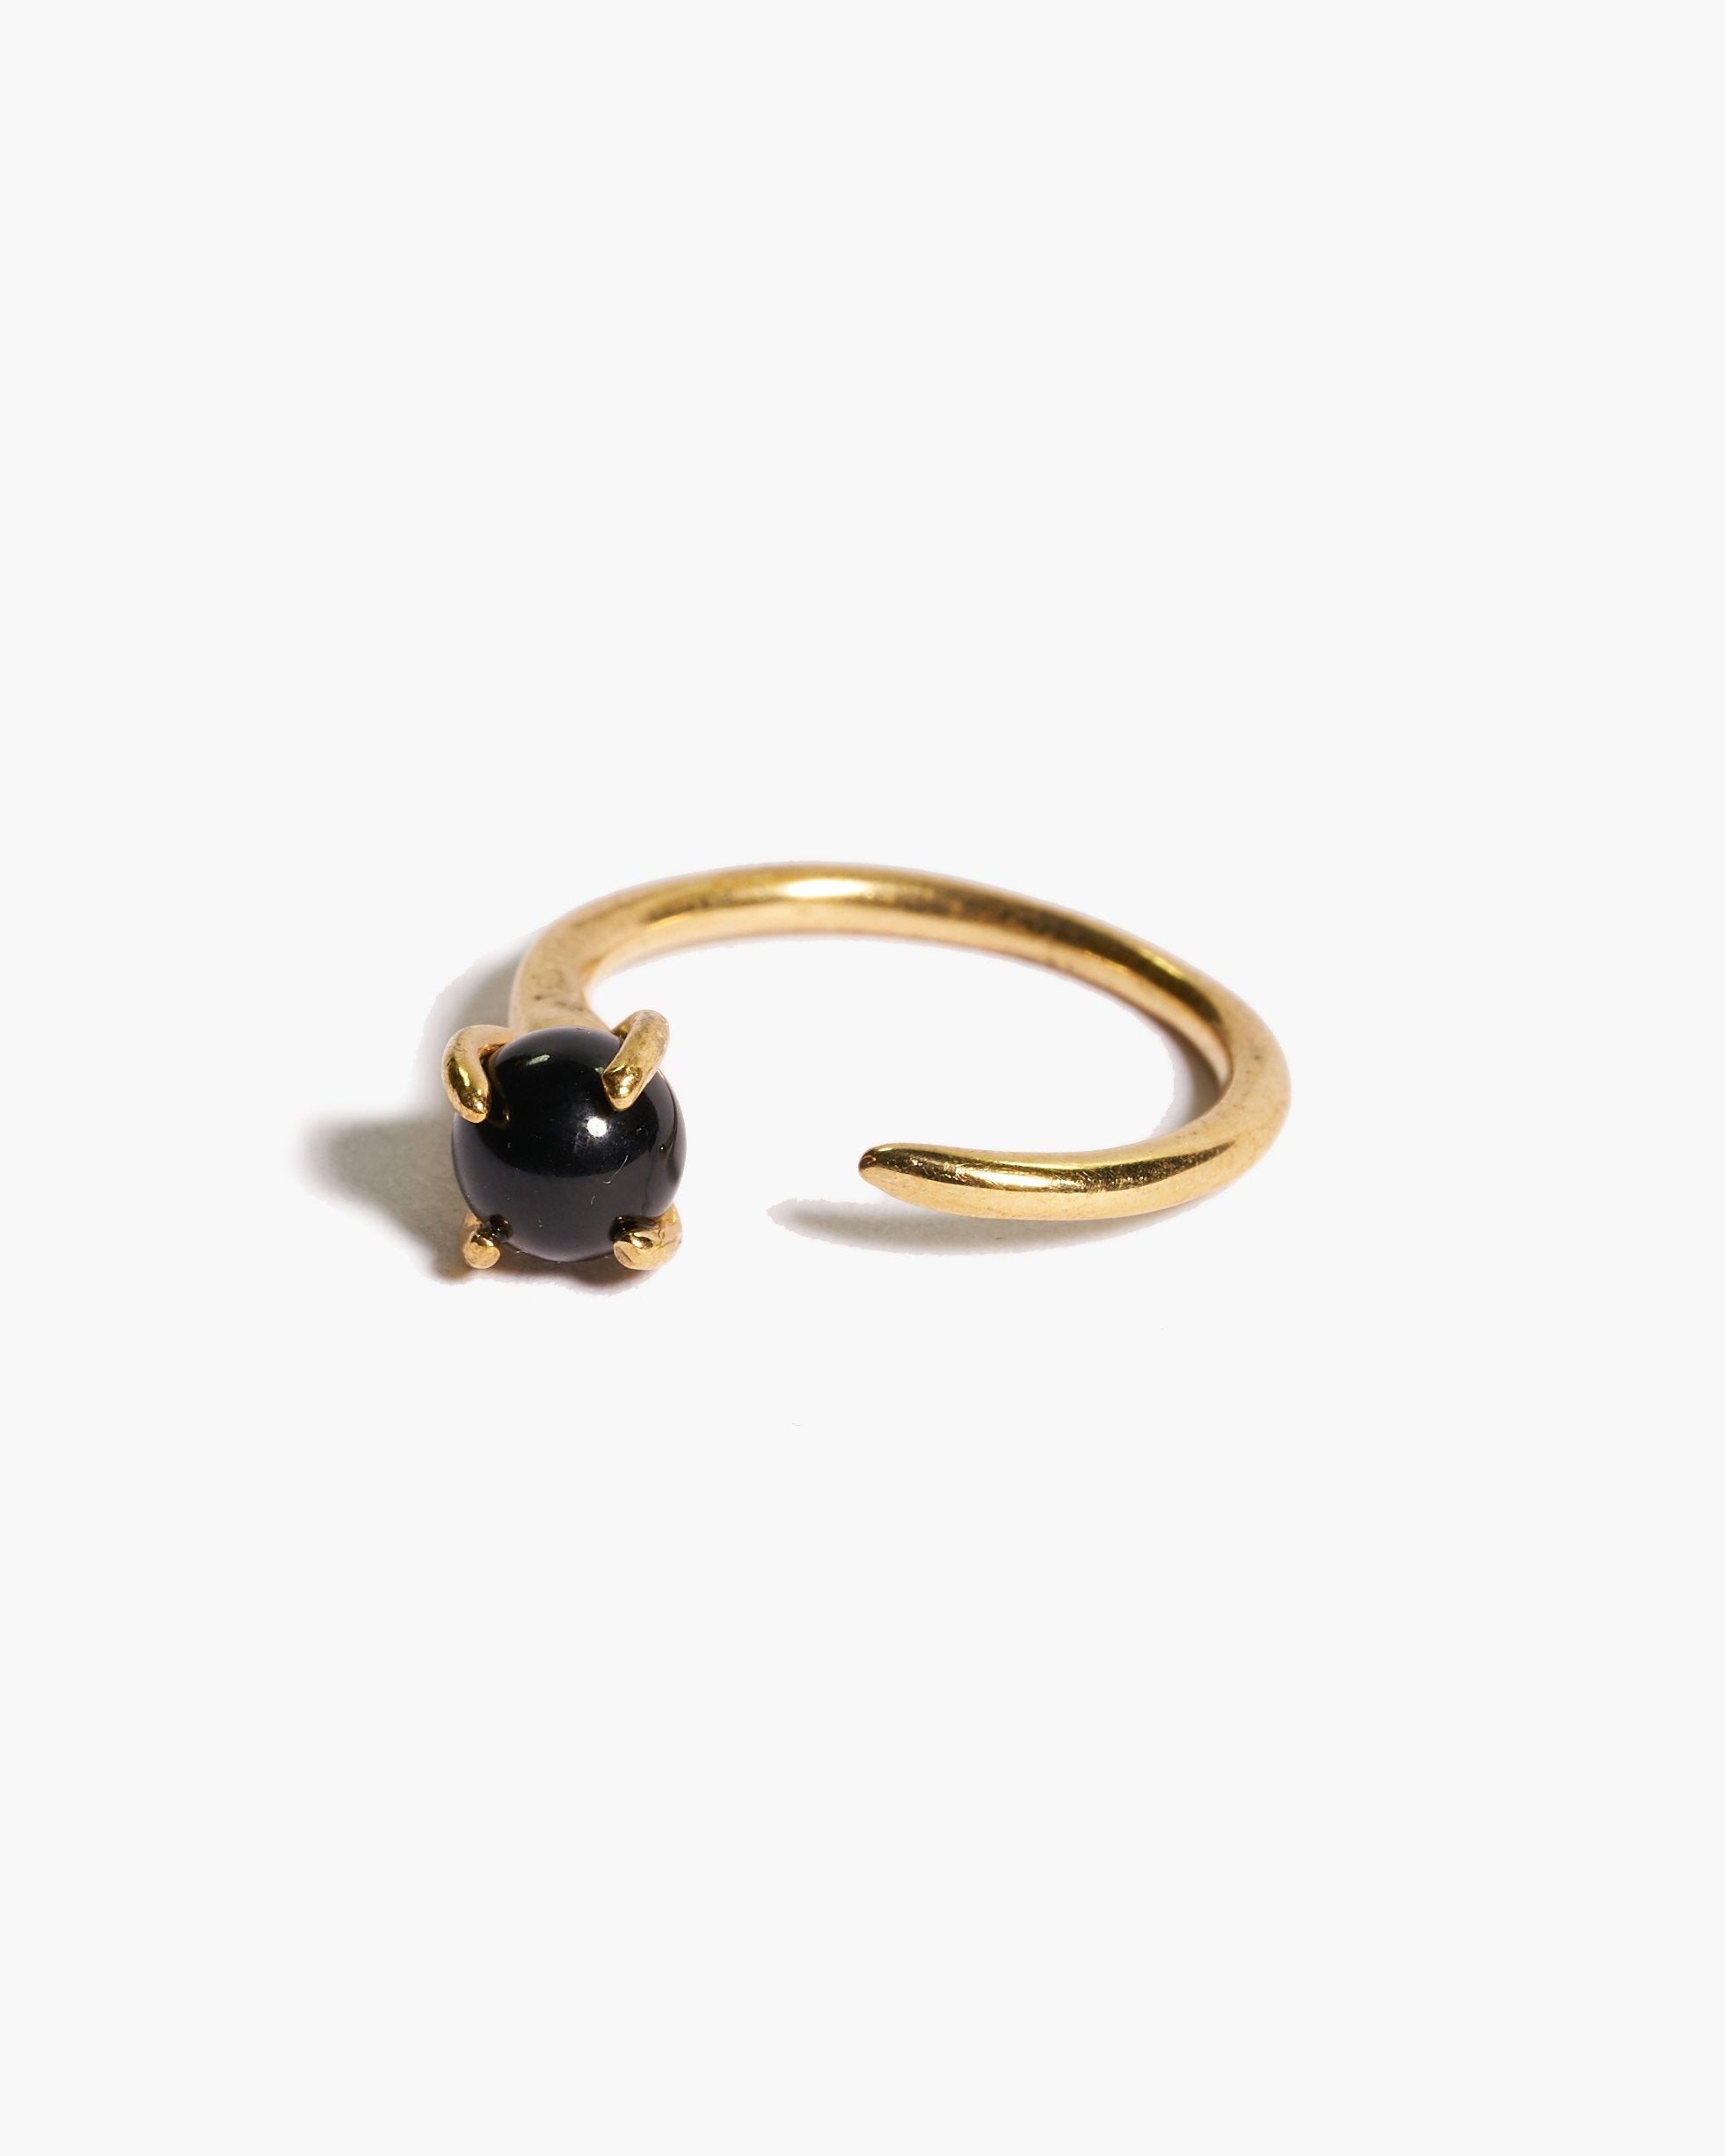 Odette Klint Ring in Brass with Black Onyx